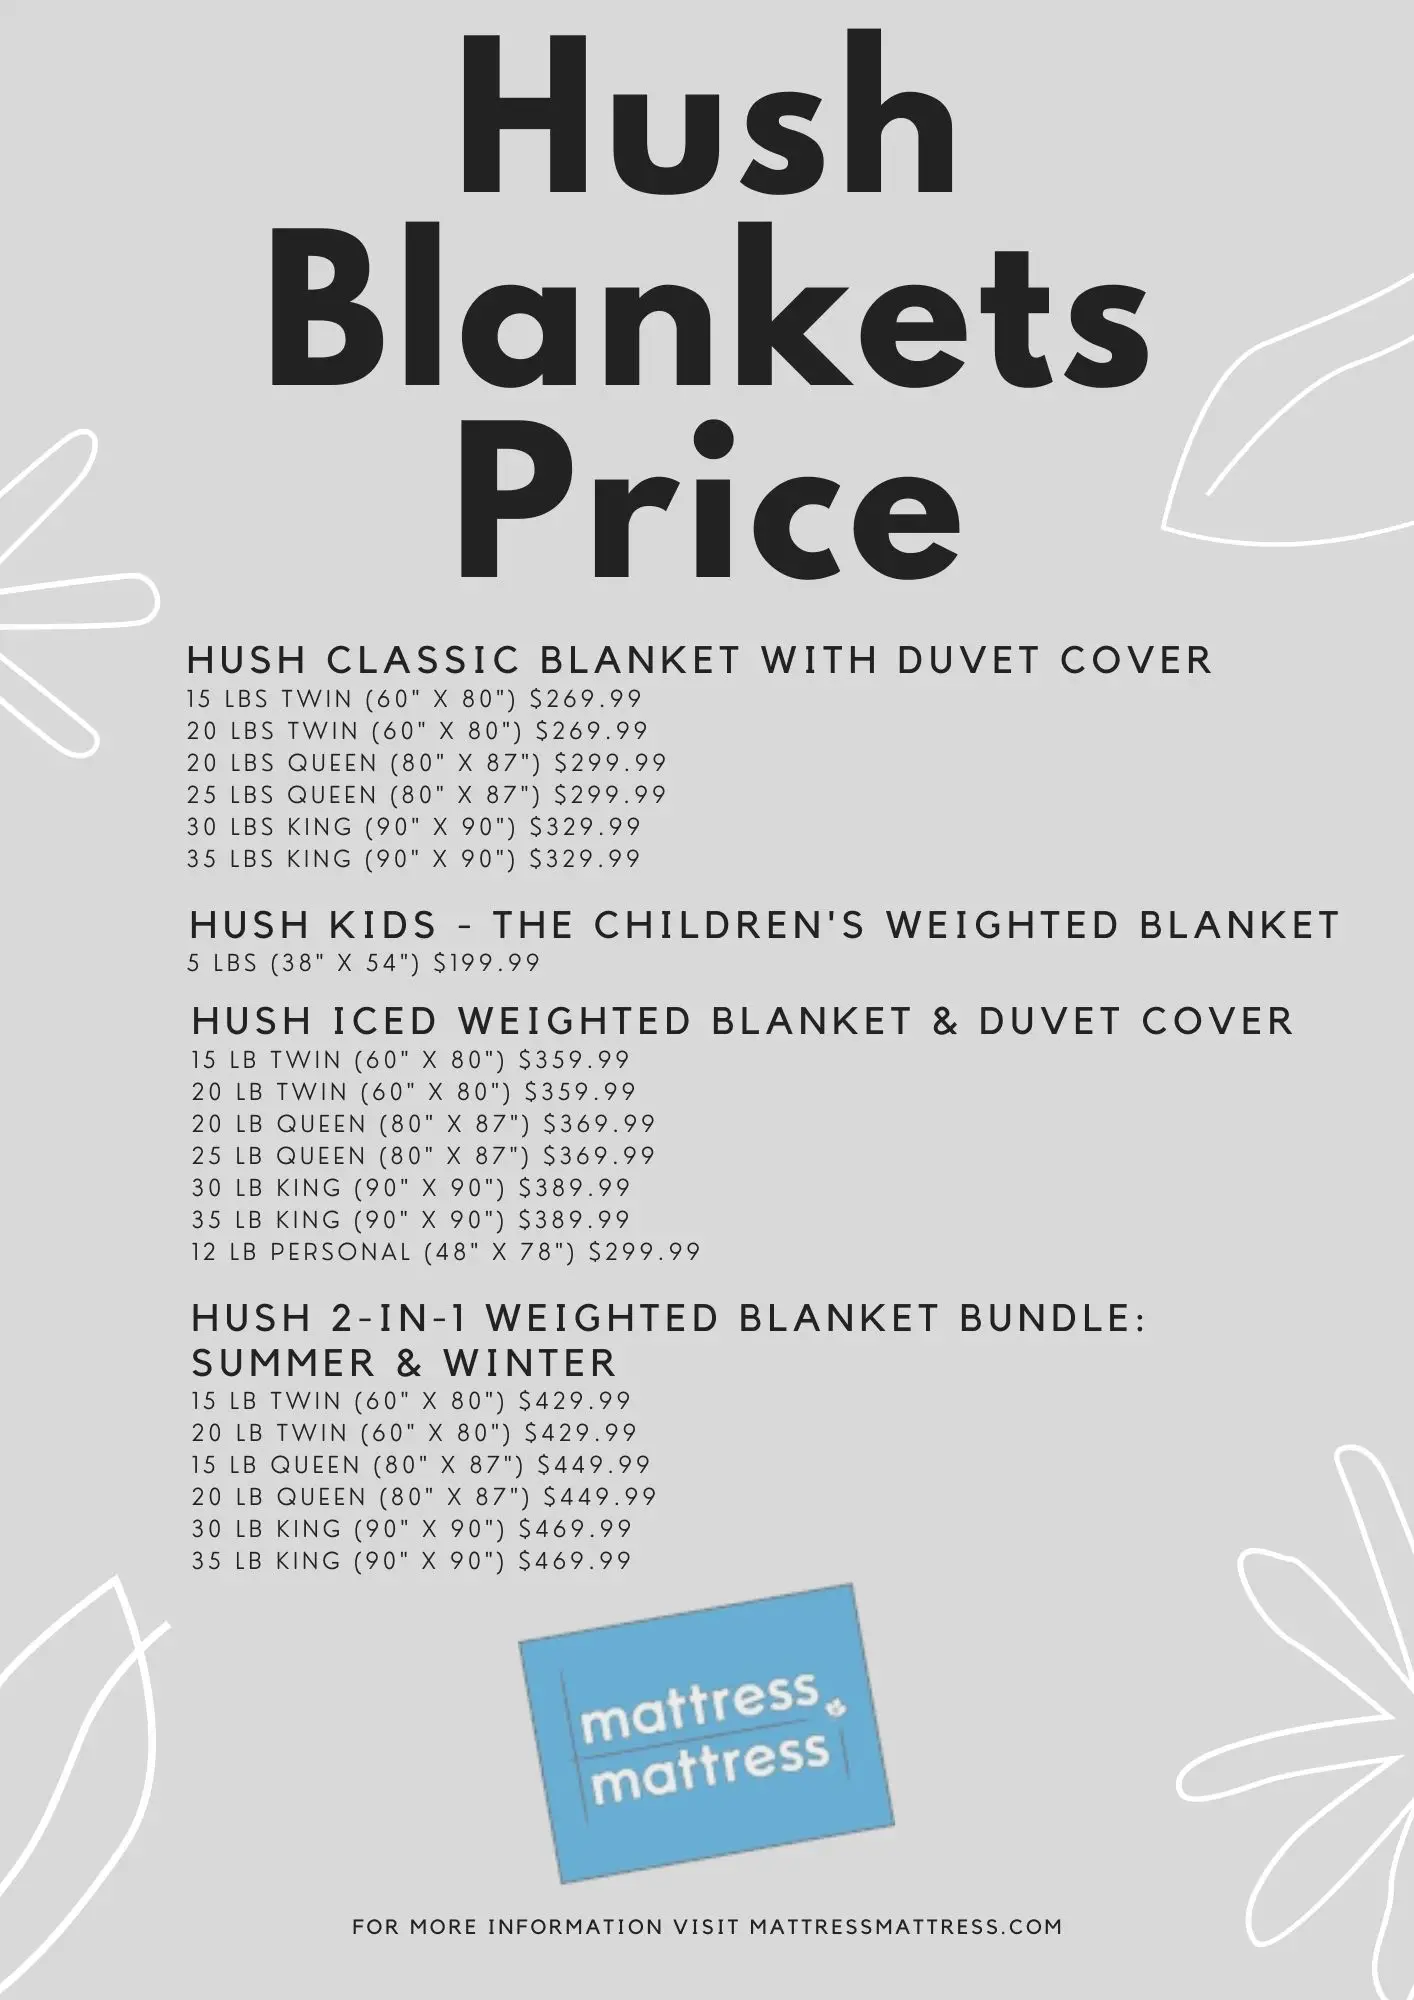 Hush Blankets Price